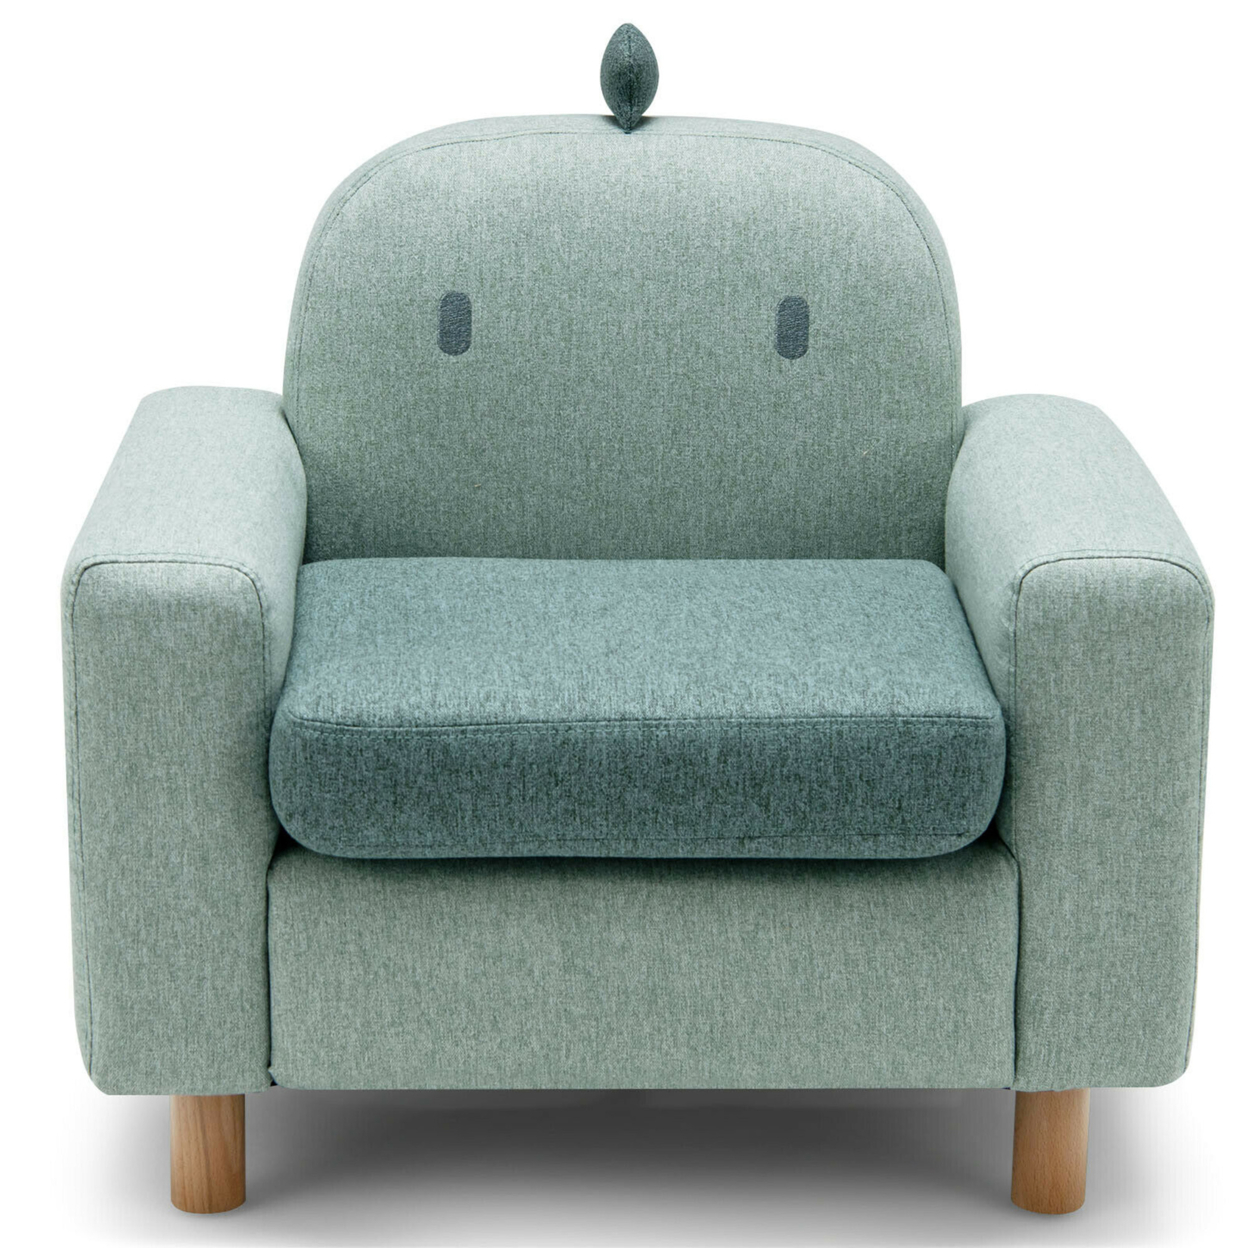 Kids Dinosaur/Panda/Chick Sofa Wooden Armrest Chair Couch W/ Thick Cushion Beech Legs Gift - Green, Dinosaur